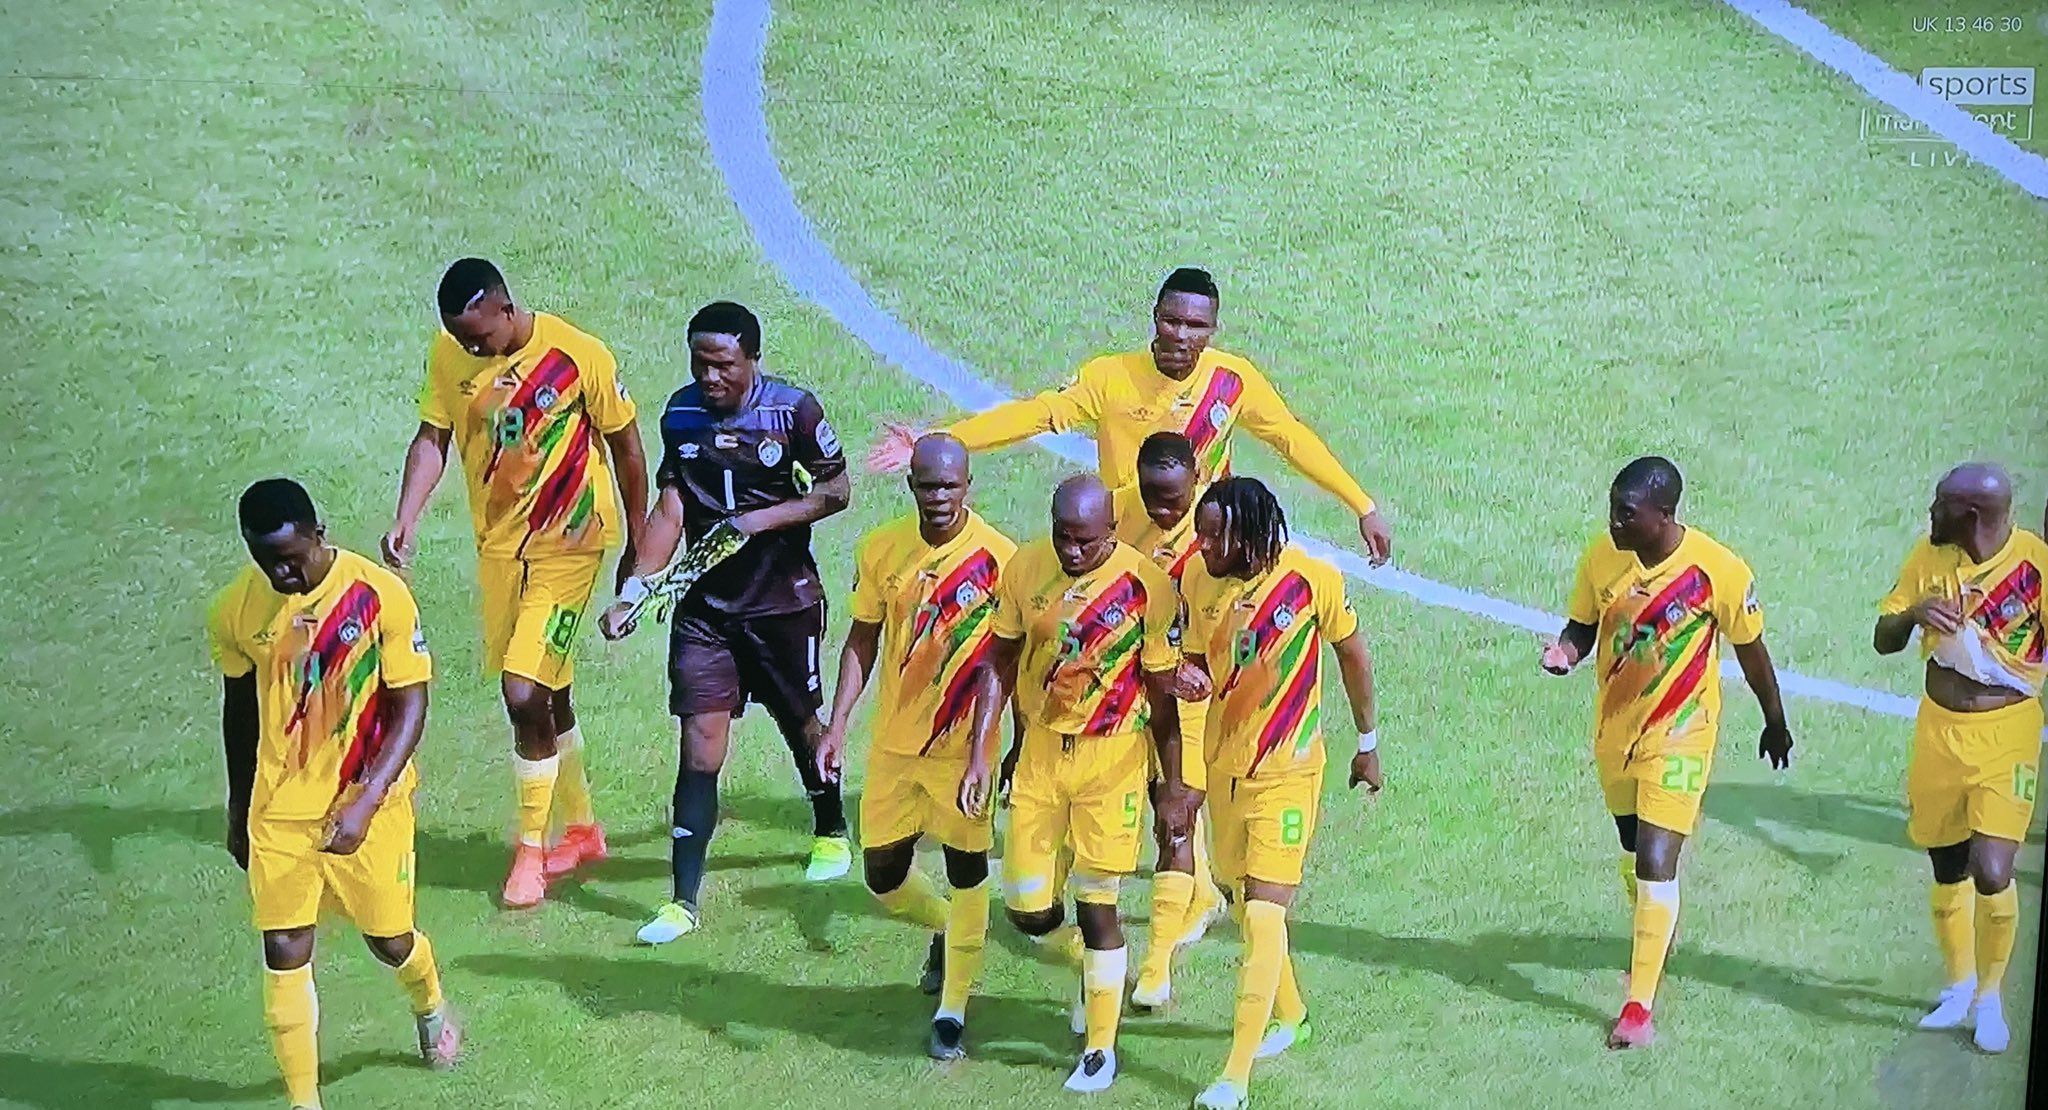 Madzongwe Issues Heartfelt Apology For Penalty Following Zimbabwe’s Heartbreaking Loss To Senegal